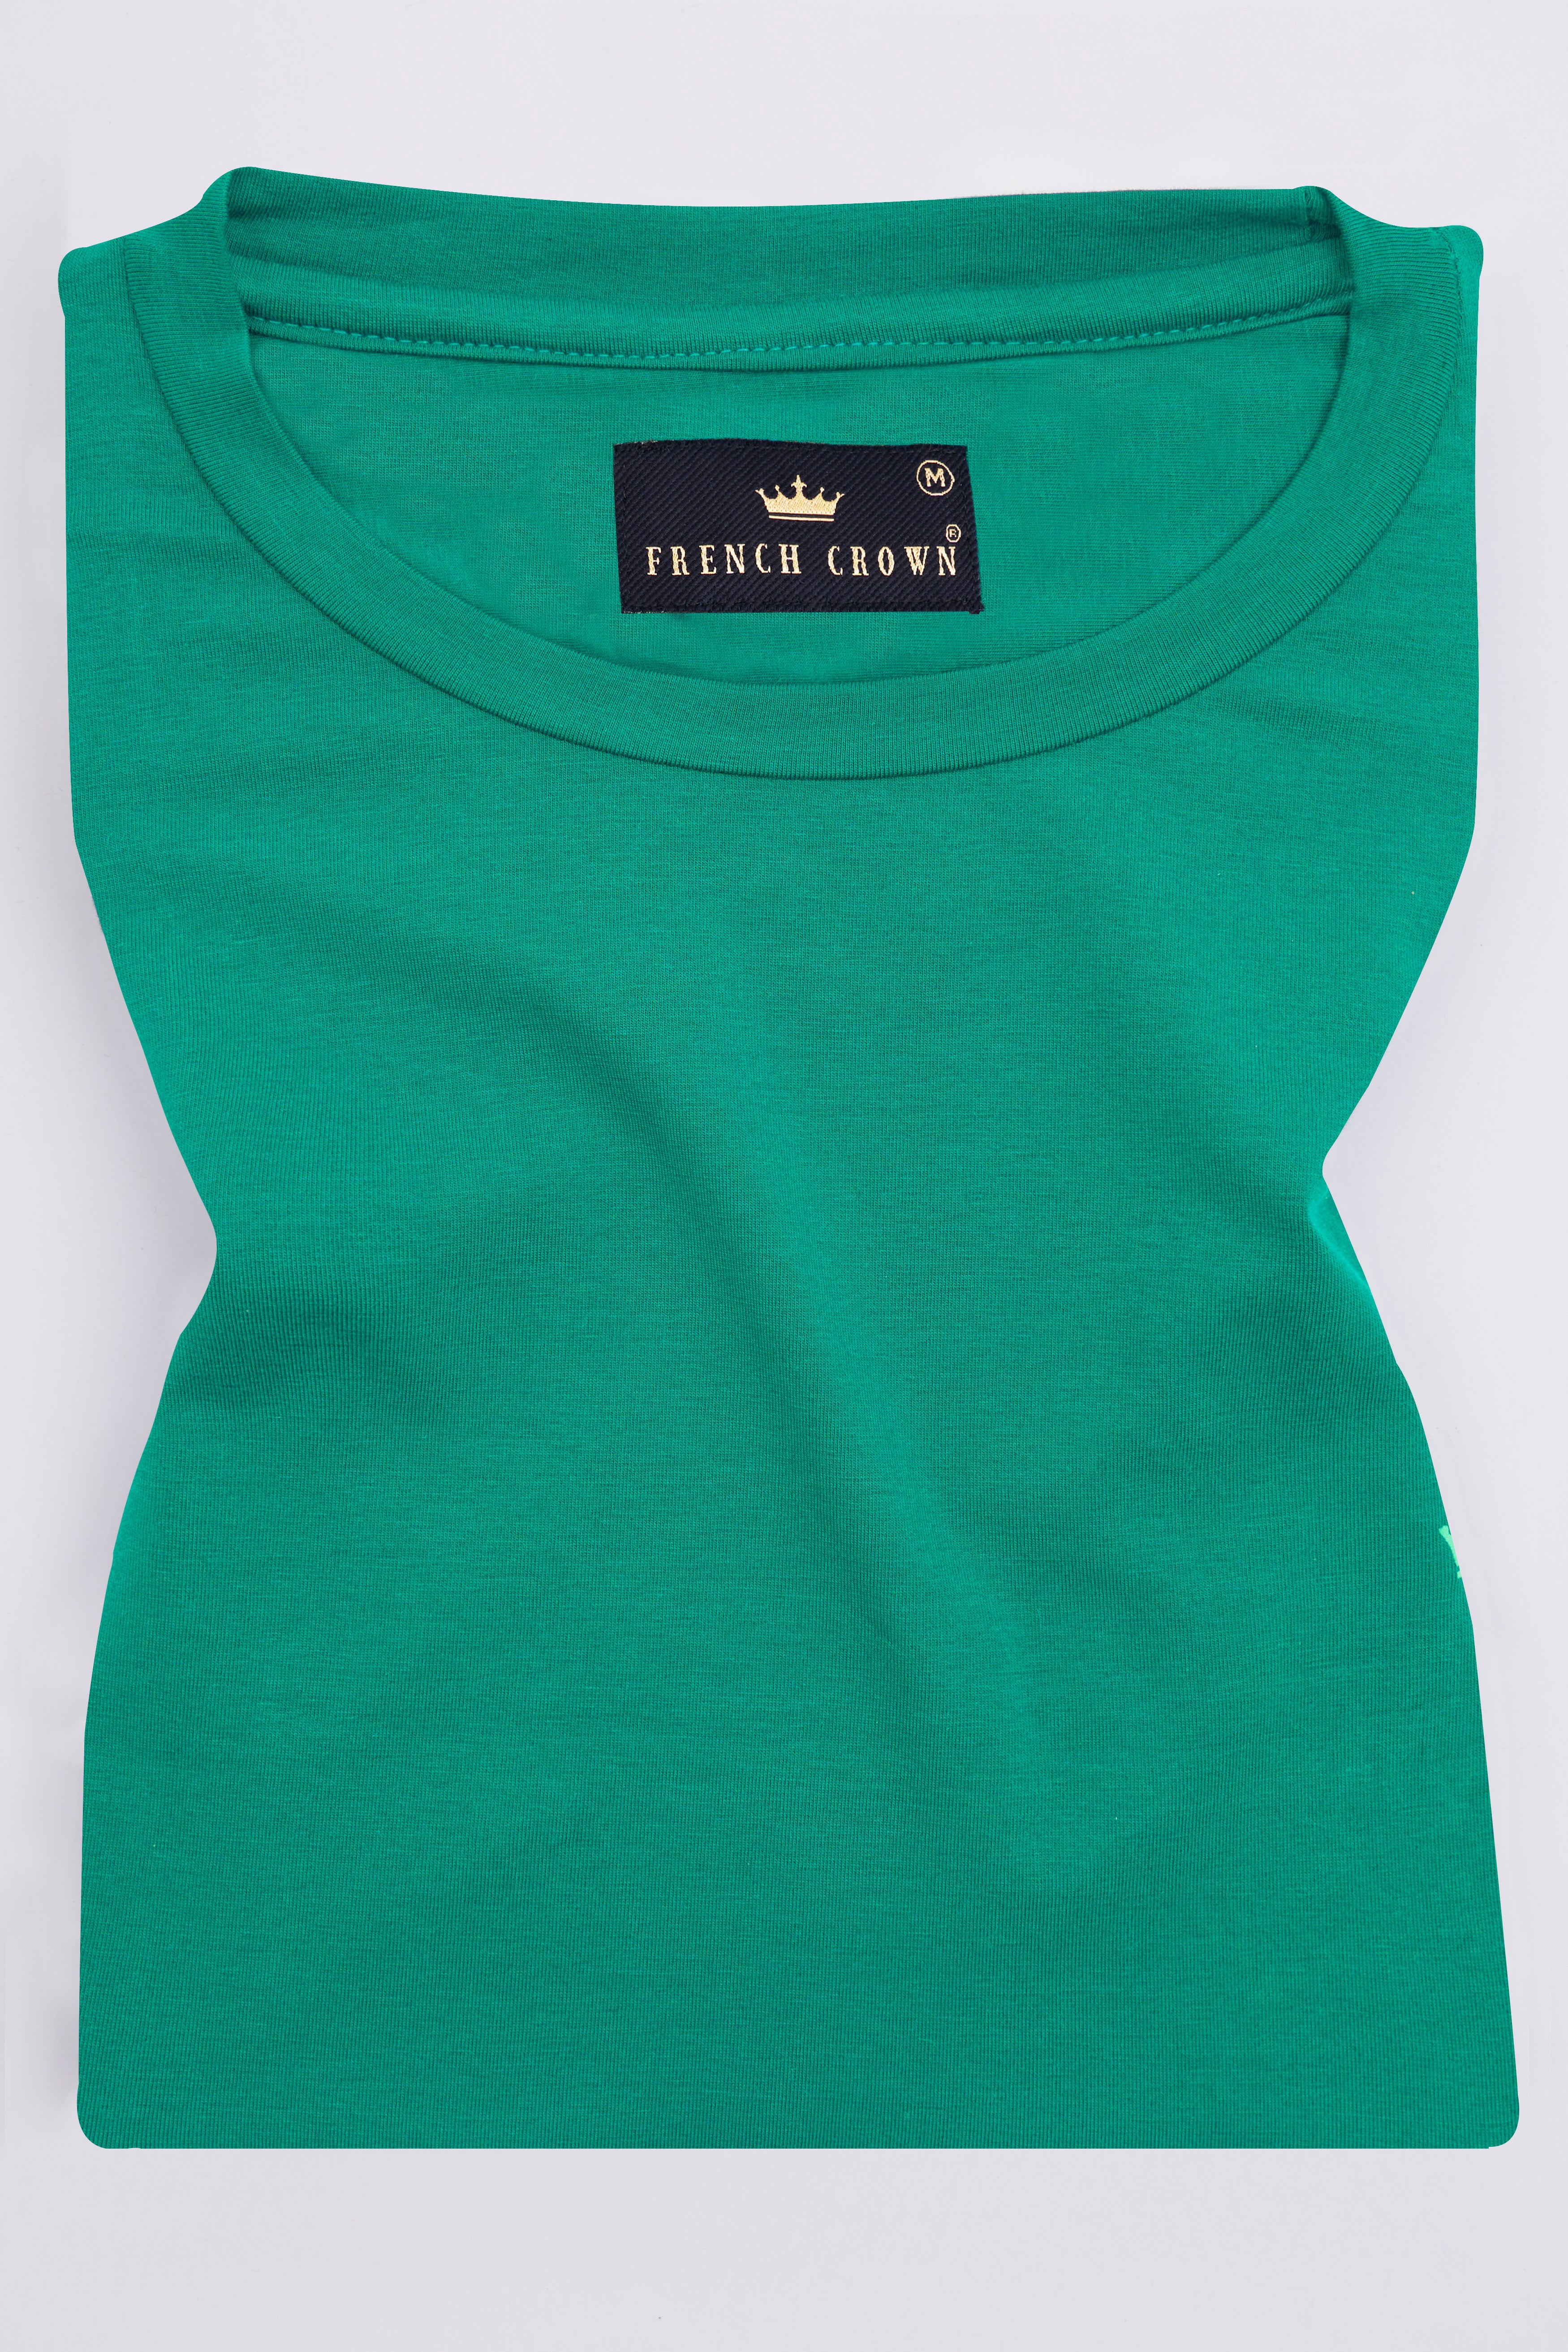 Gossamer Green Hand Painted Premium Cotton Designer T-Shirt TS005-W014-S, TS005-W014-M, TS005-W014-L, TS005-W014-XL, TS005-W014-XXL